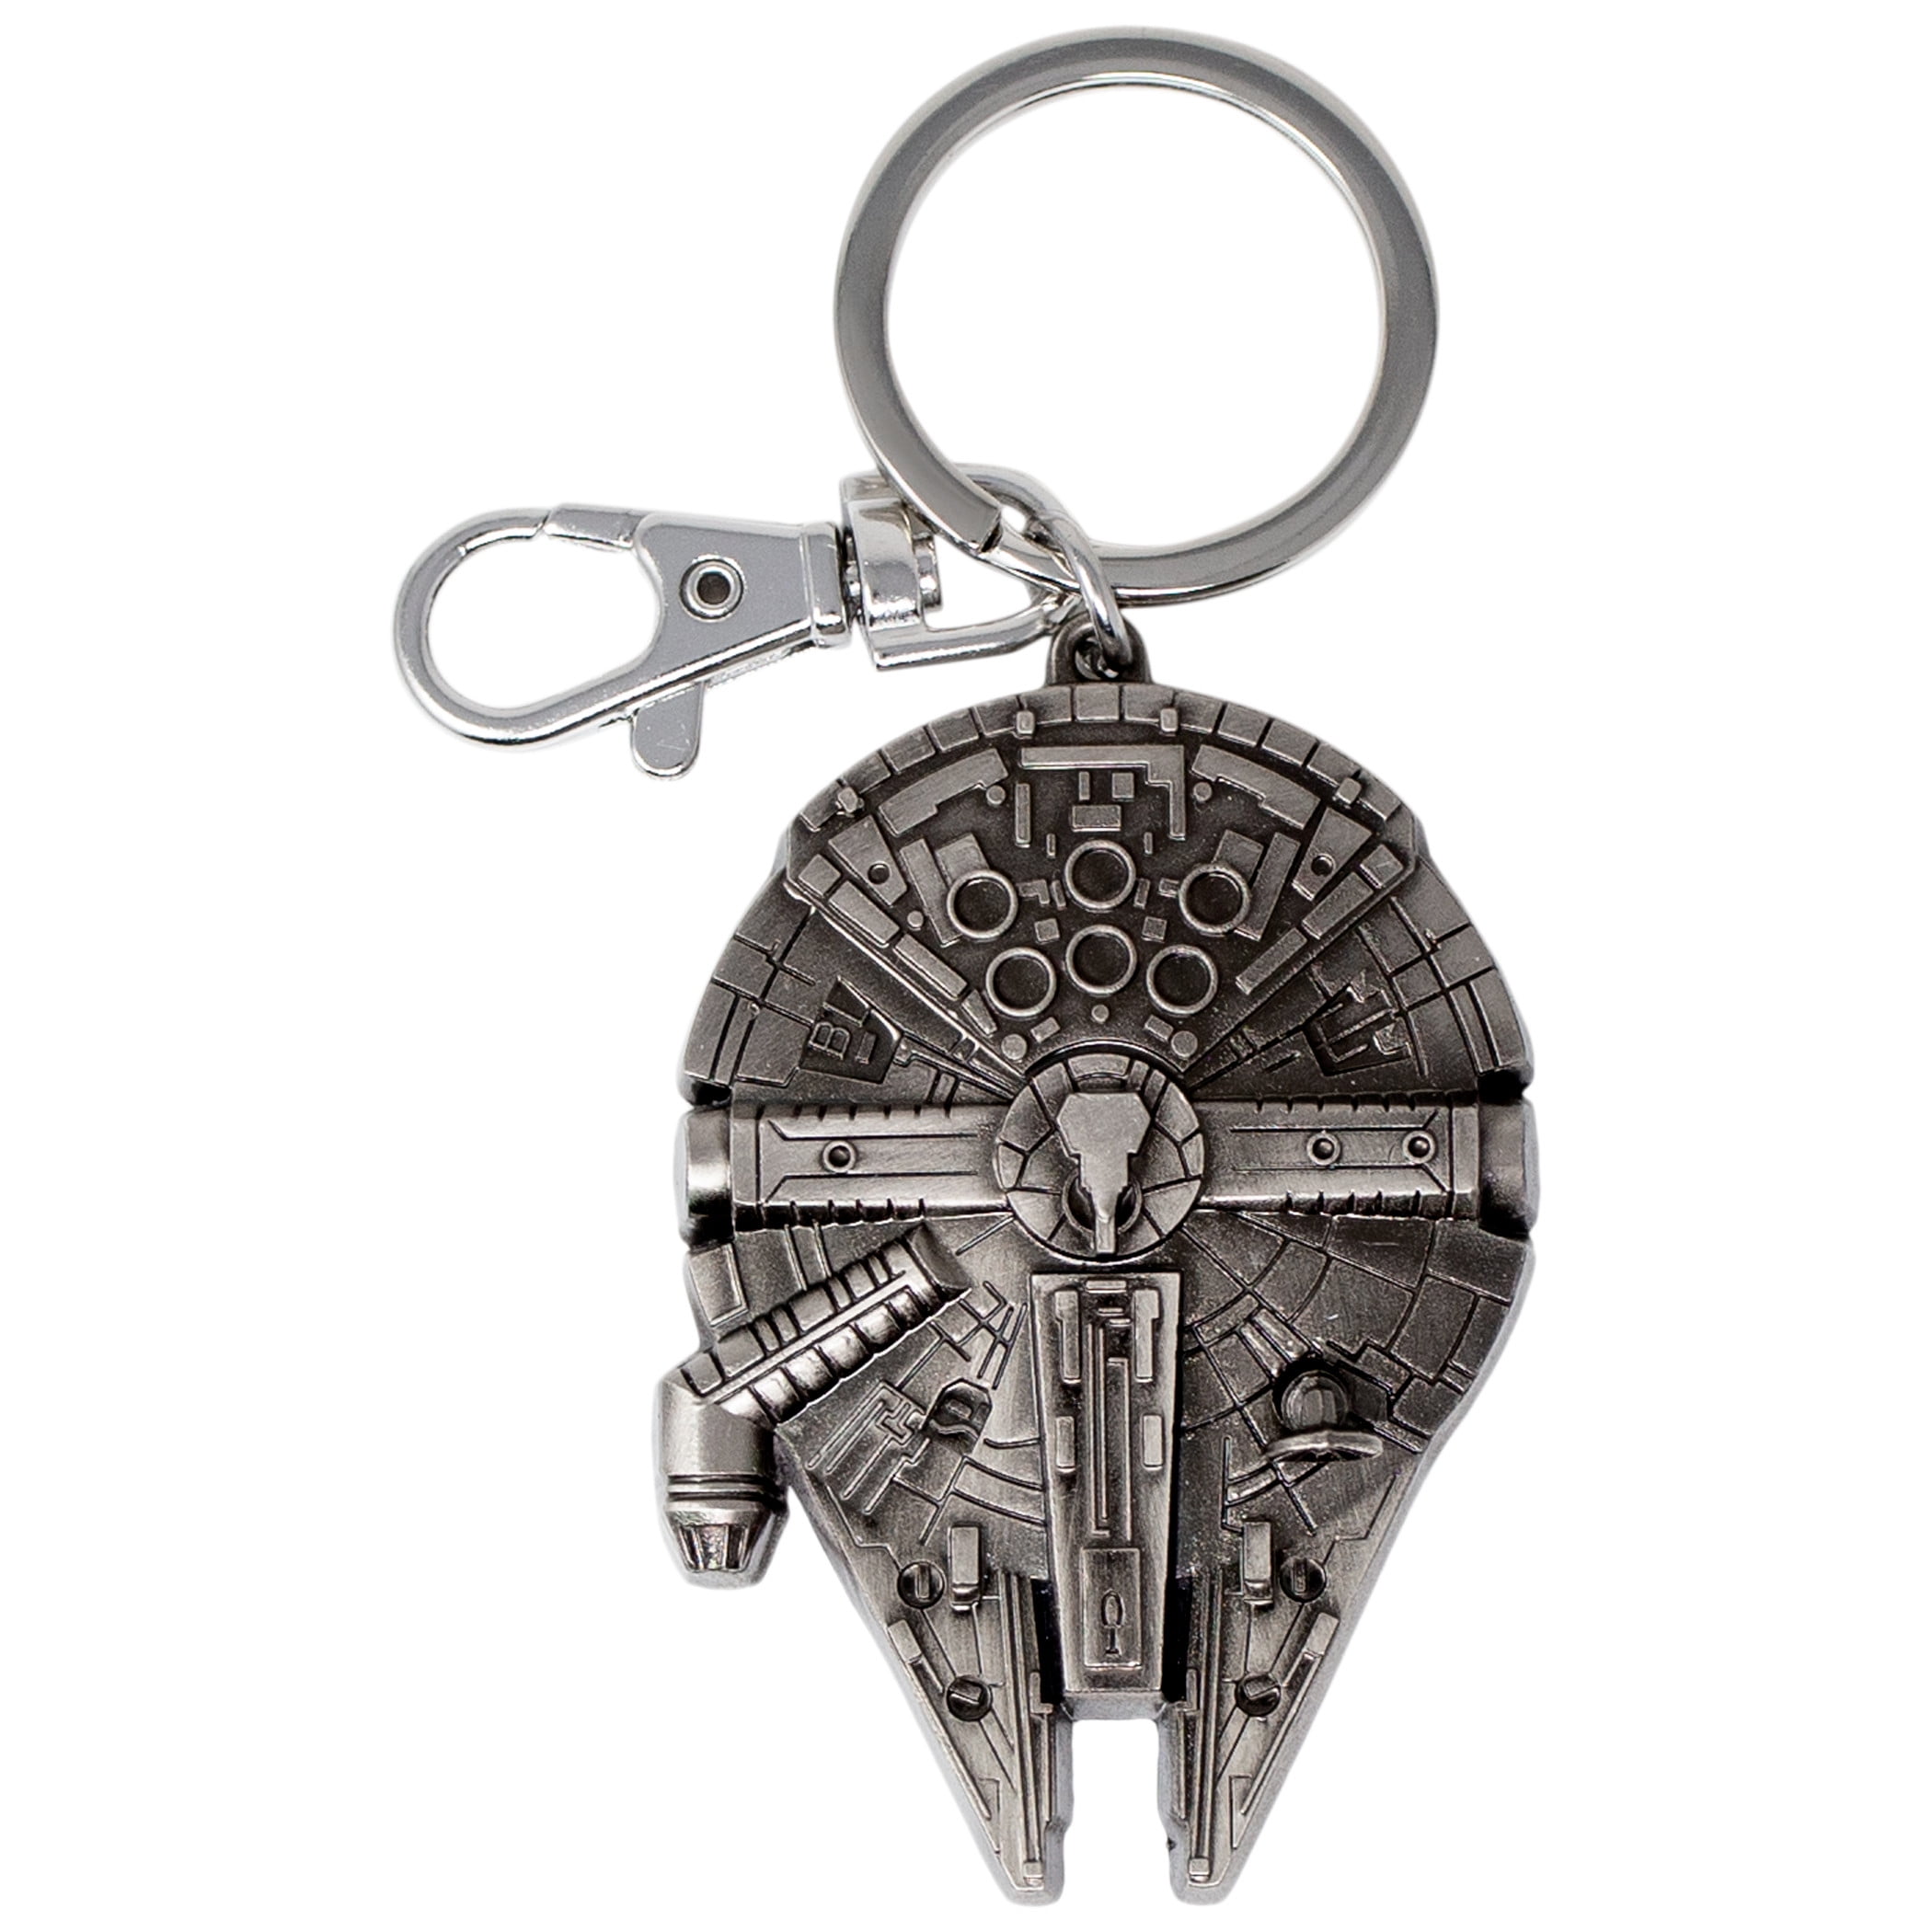 New Star Wars Spaceship Millennium Falcon Silver Metal Keychain Keyring Gift 